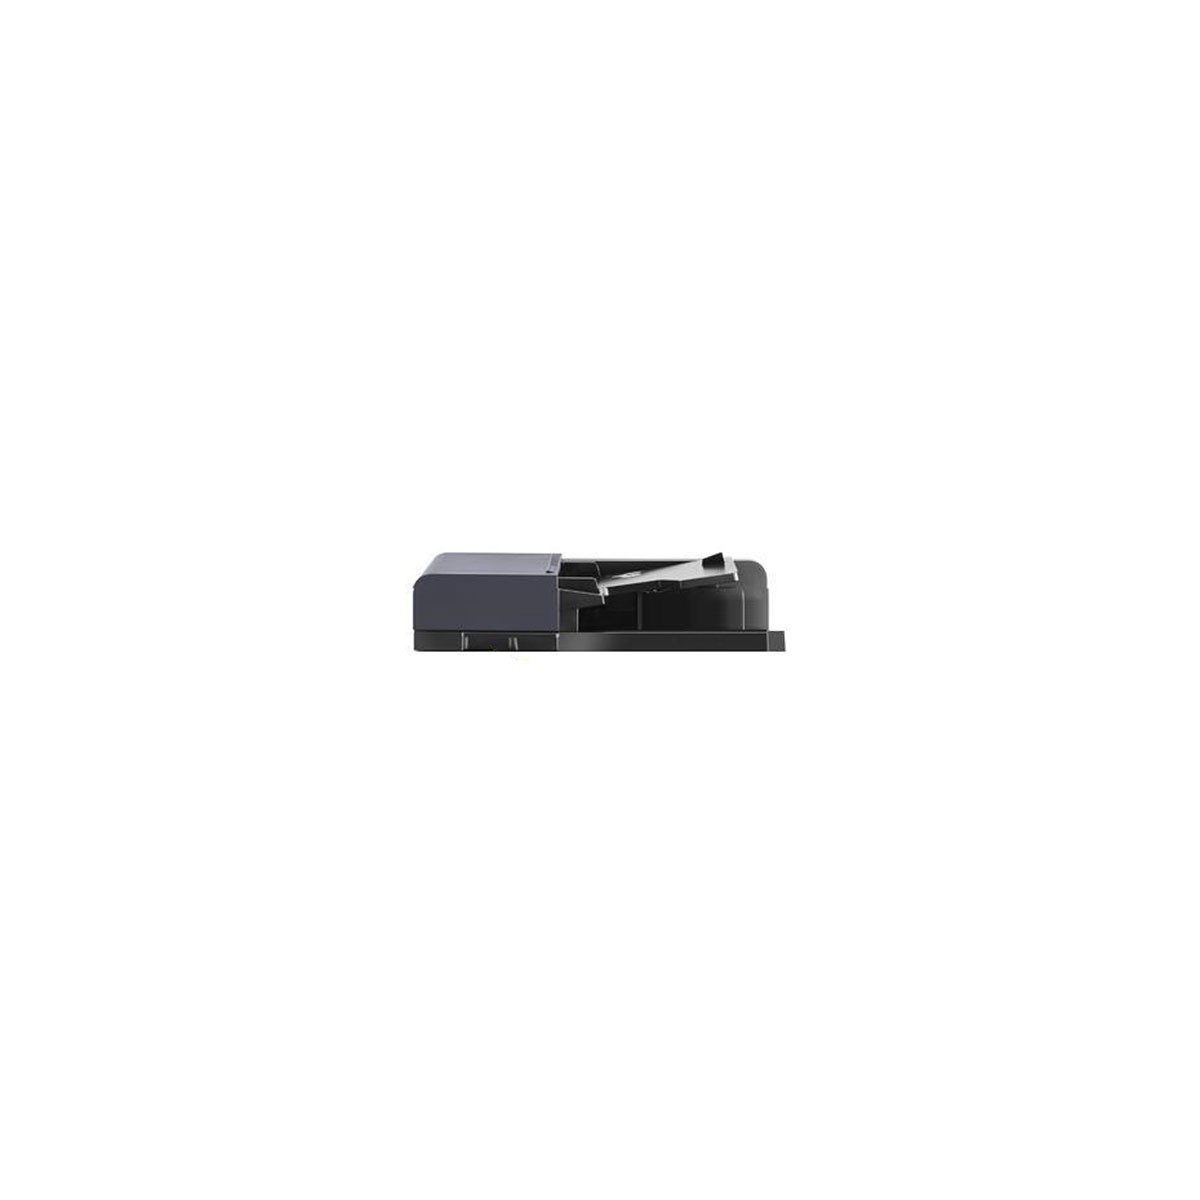 Kyocera DP-5110 - Auto document feeder (ADF) - Kyocera - TASKalfa 356ci - 75 sheets - Black